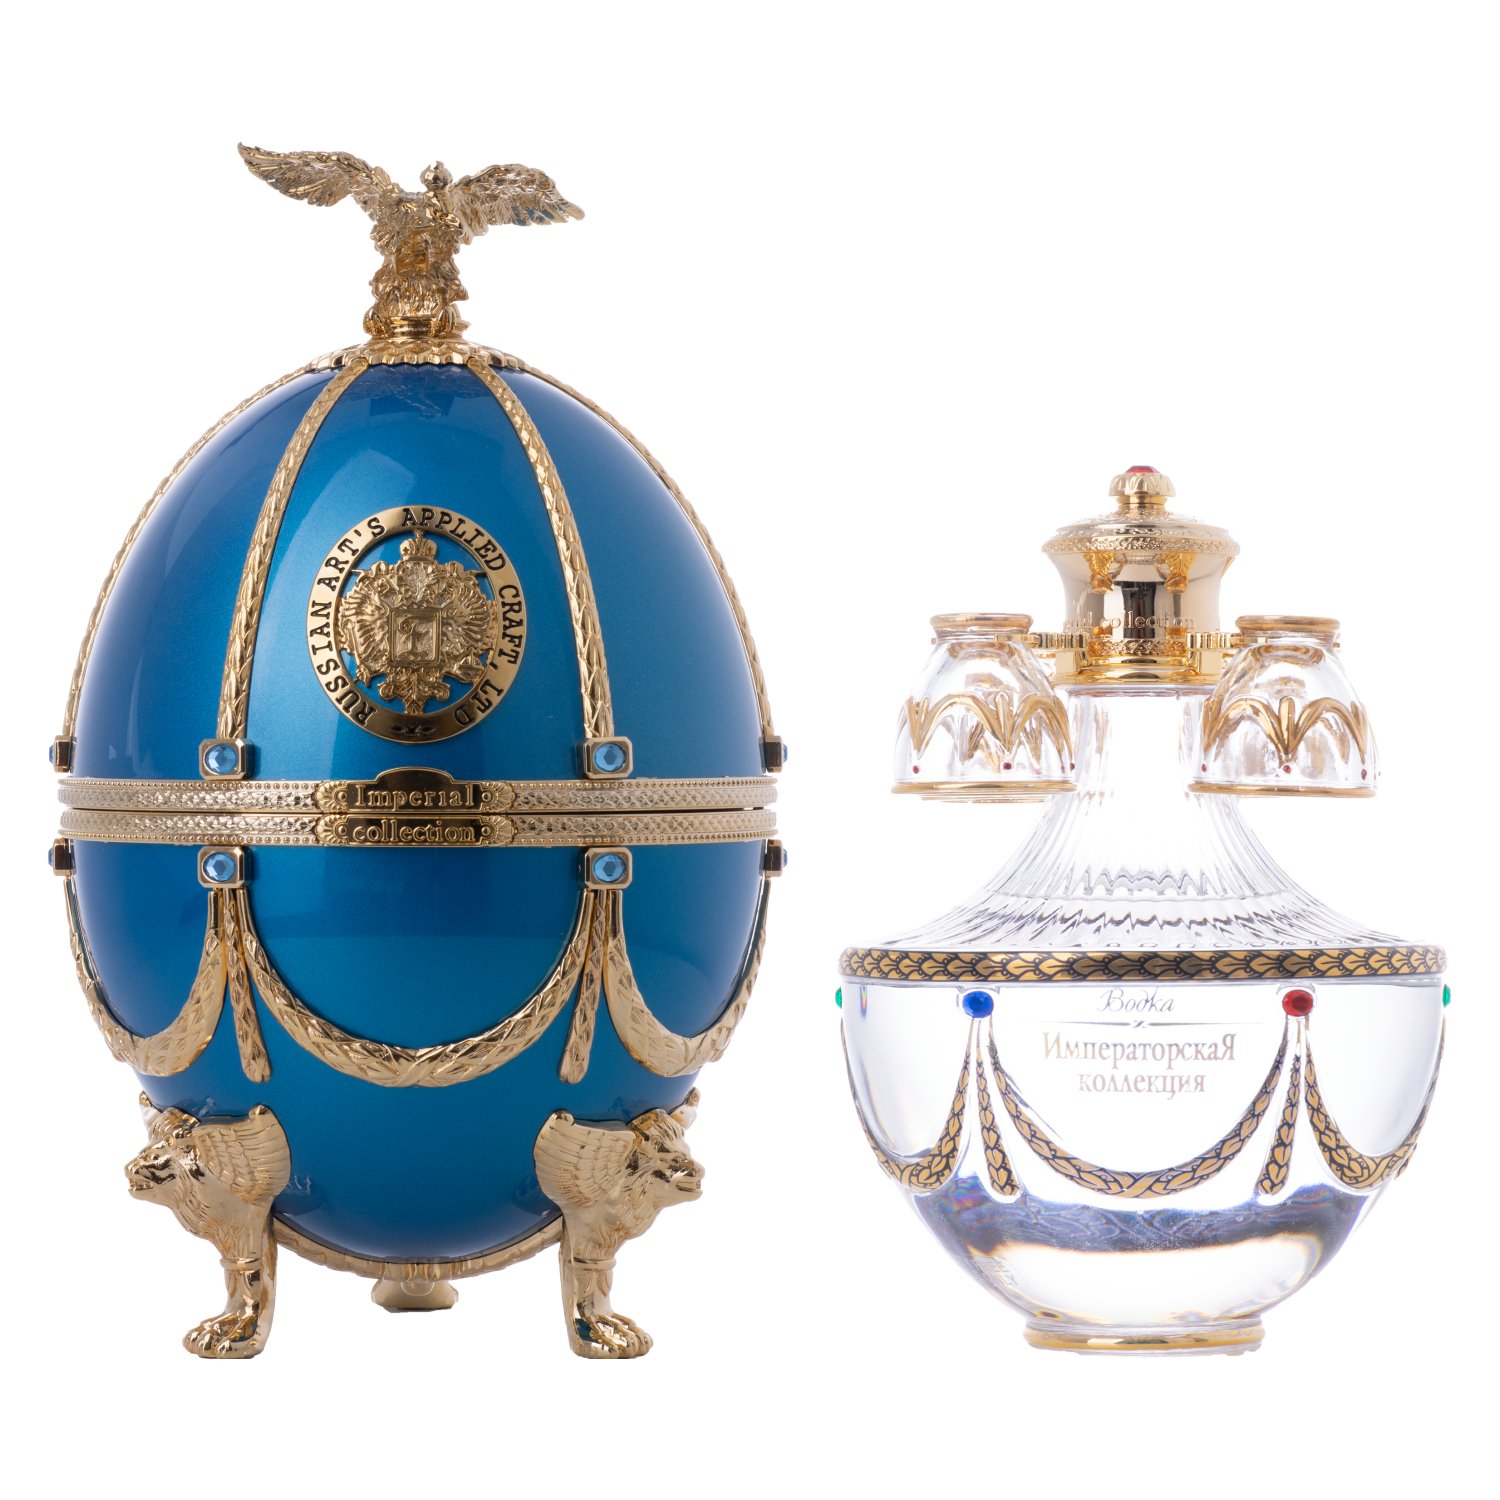 Caskaja Imperial Carskaja Imperial Collection Faberge tyrkysová 40% 0,7L